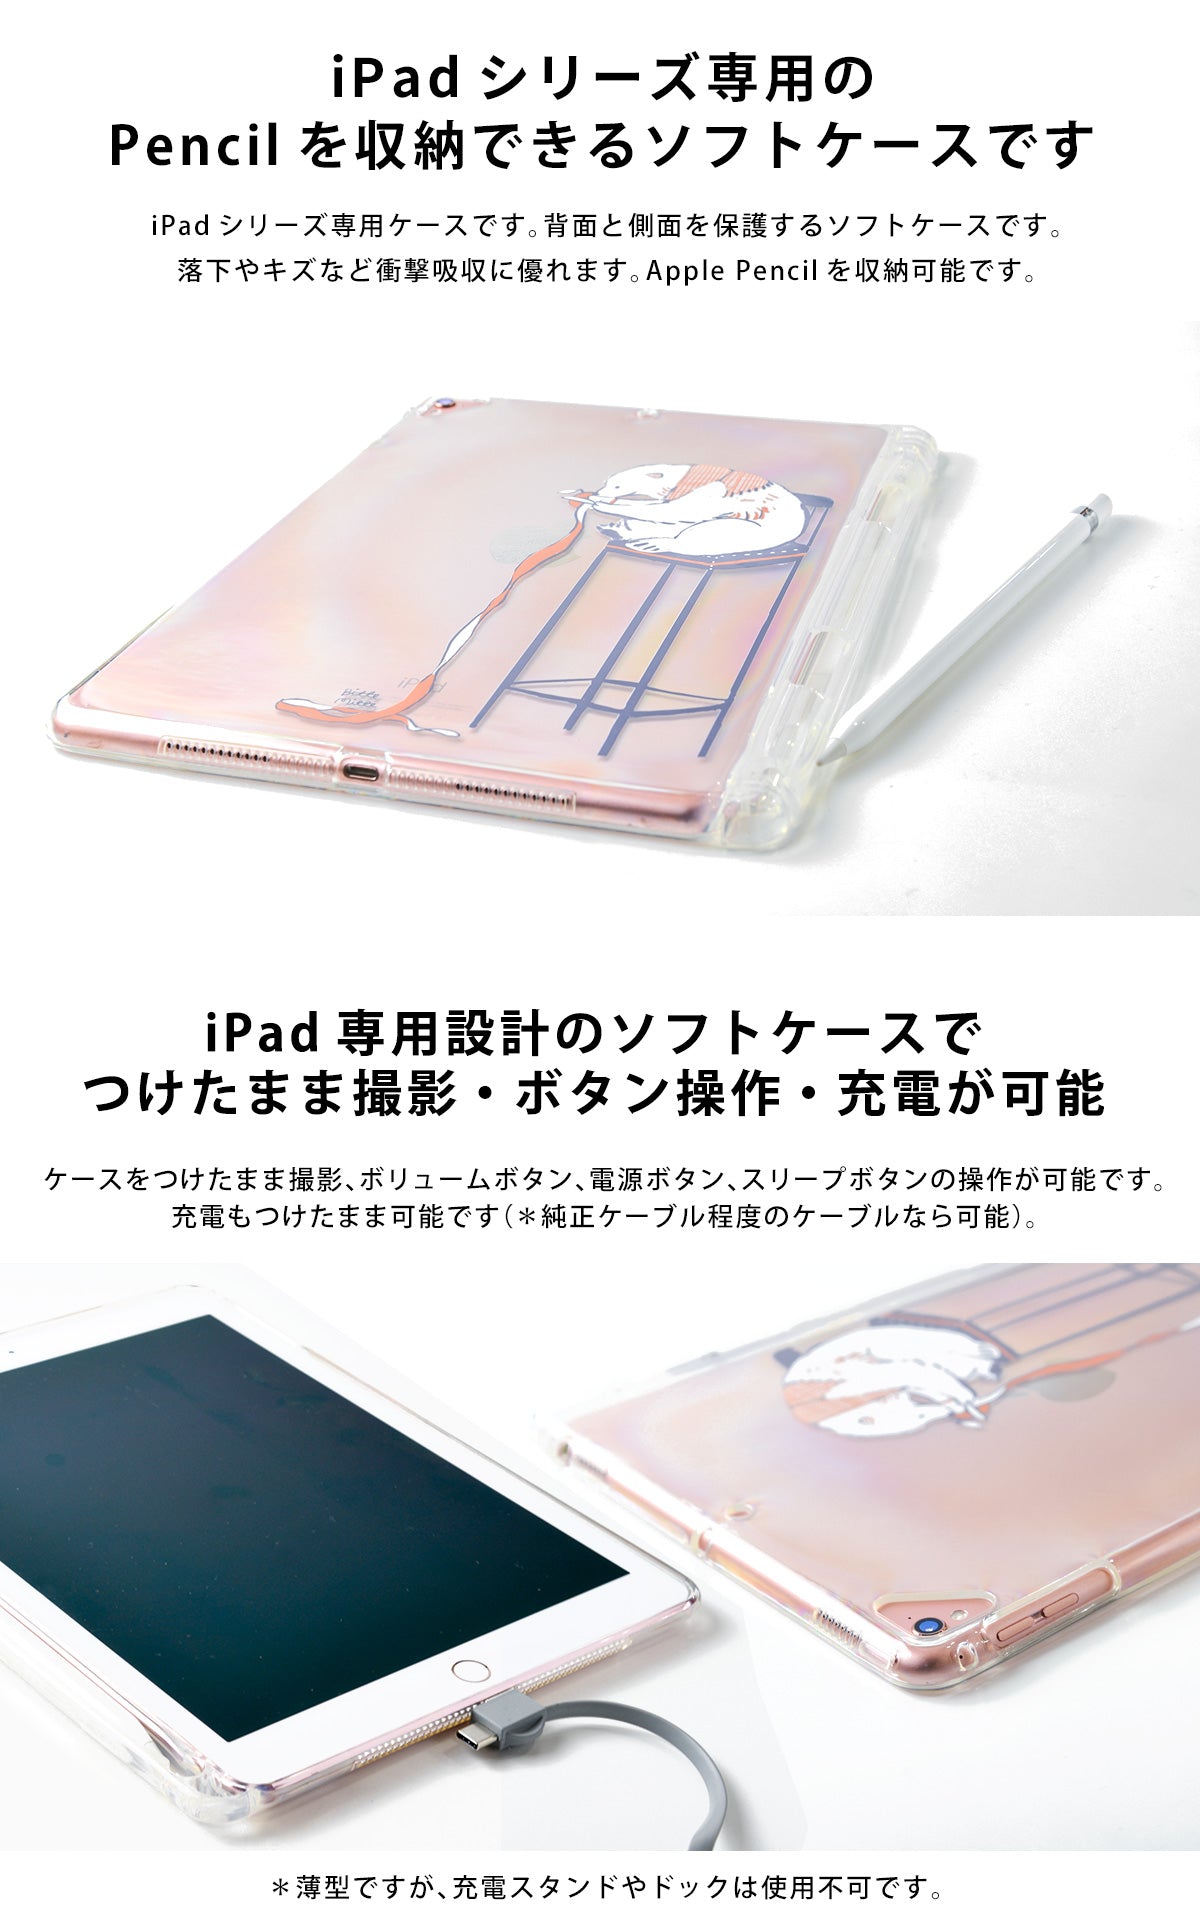 iPad、iPad mini、iPad pro、iPad Air対応のクリアケース。アップルペンシルを収納可能。